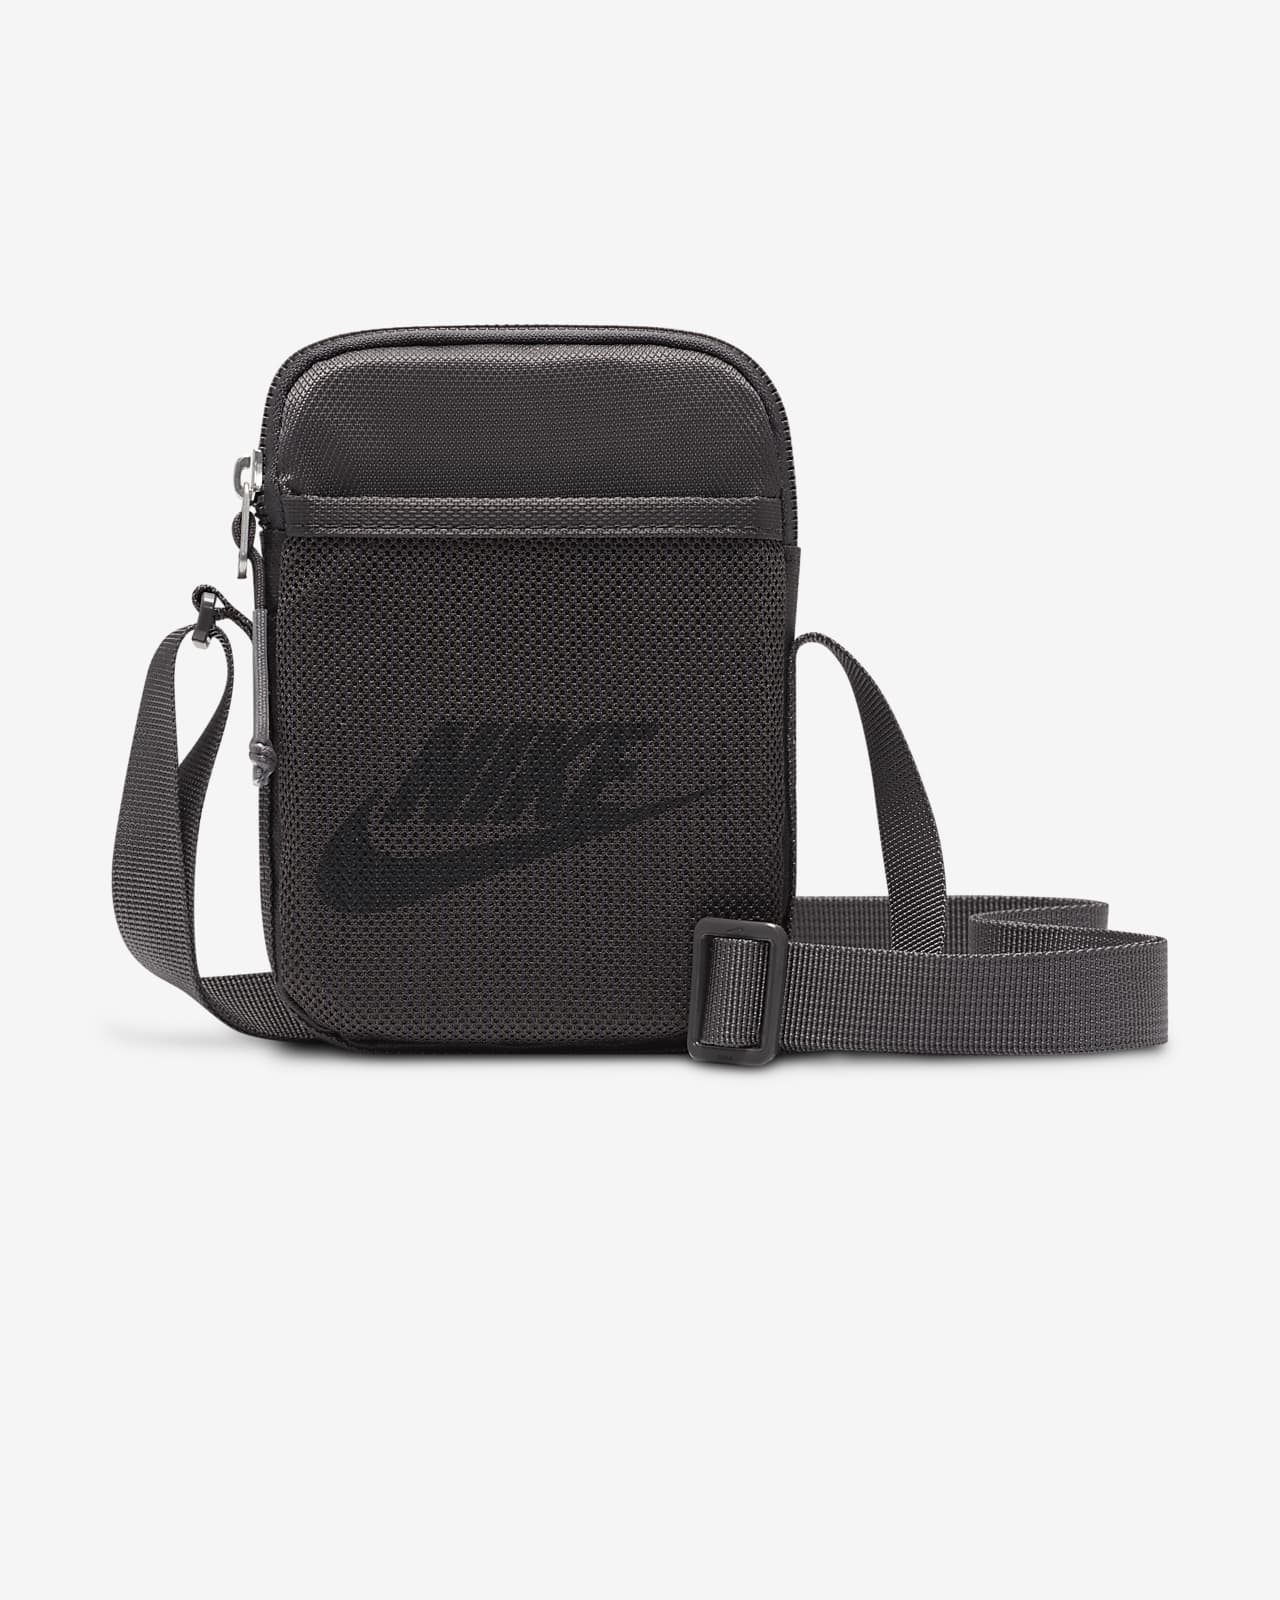 Nike Sportswear ESSENTIALS UNISEX - Across body bag - ironstone/black/grey  - Zalando.co.uk